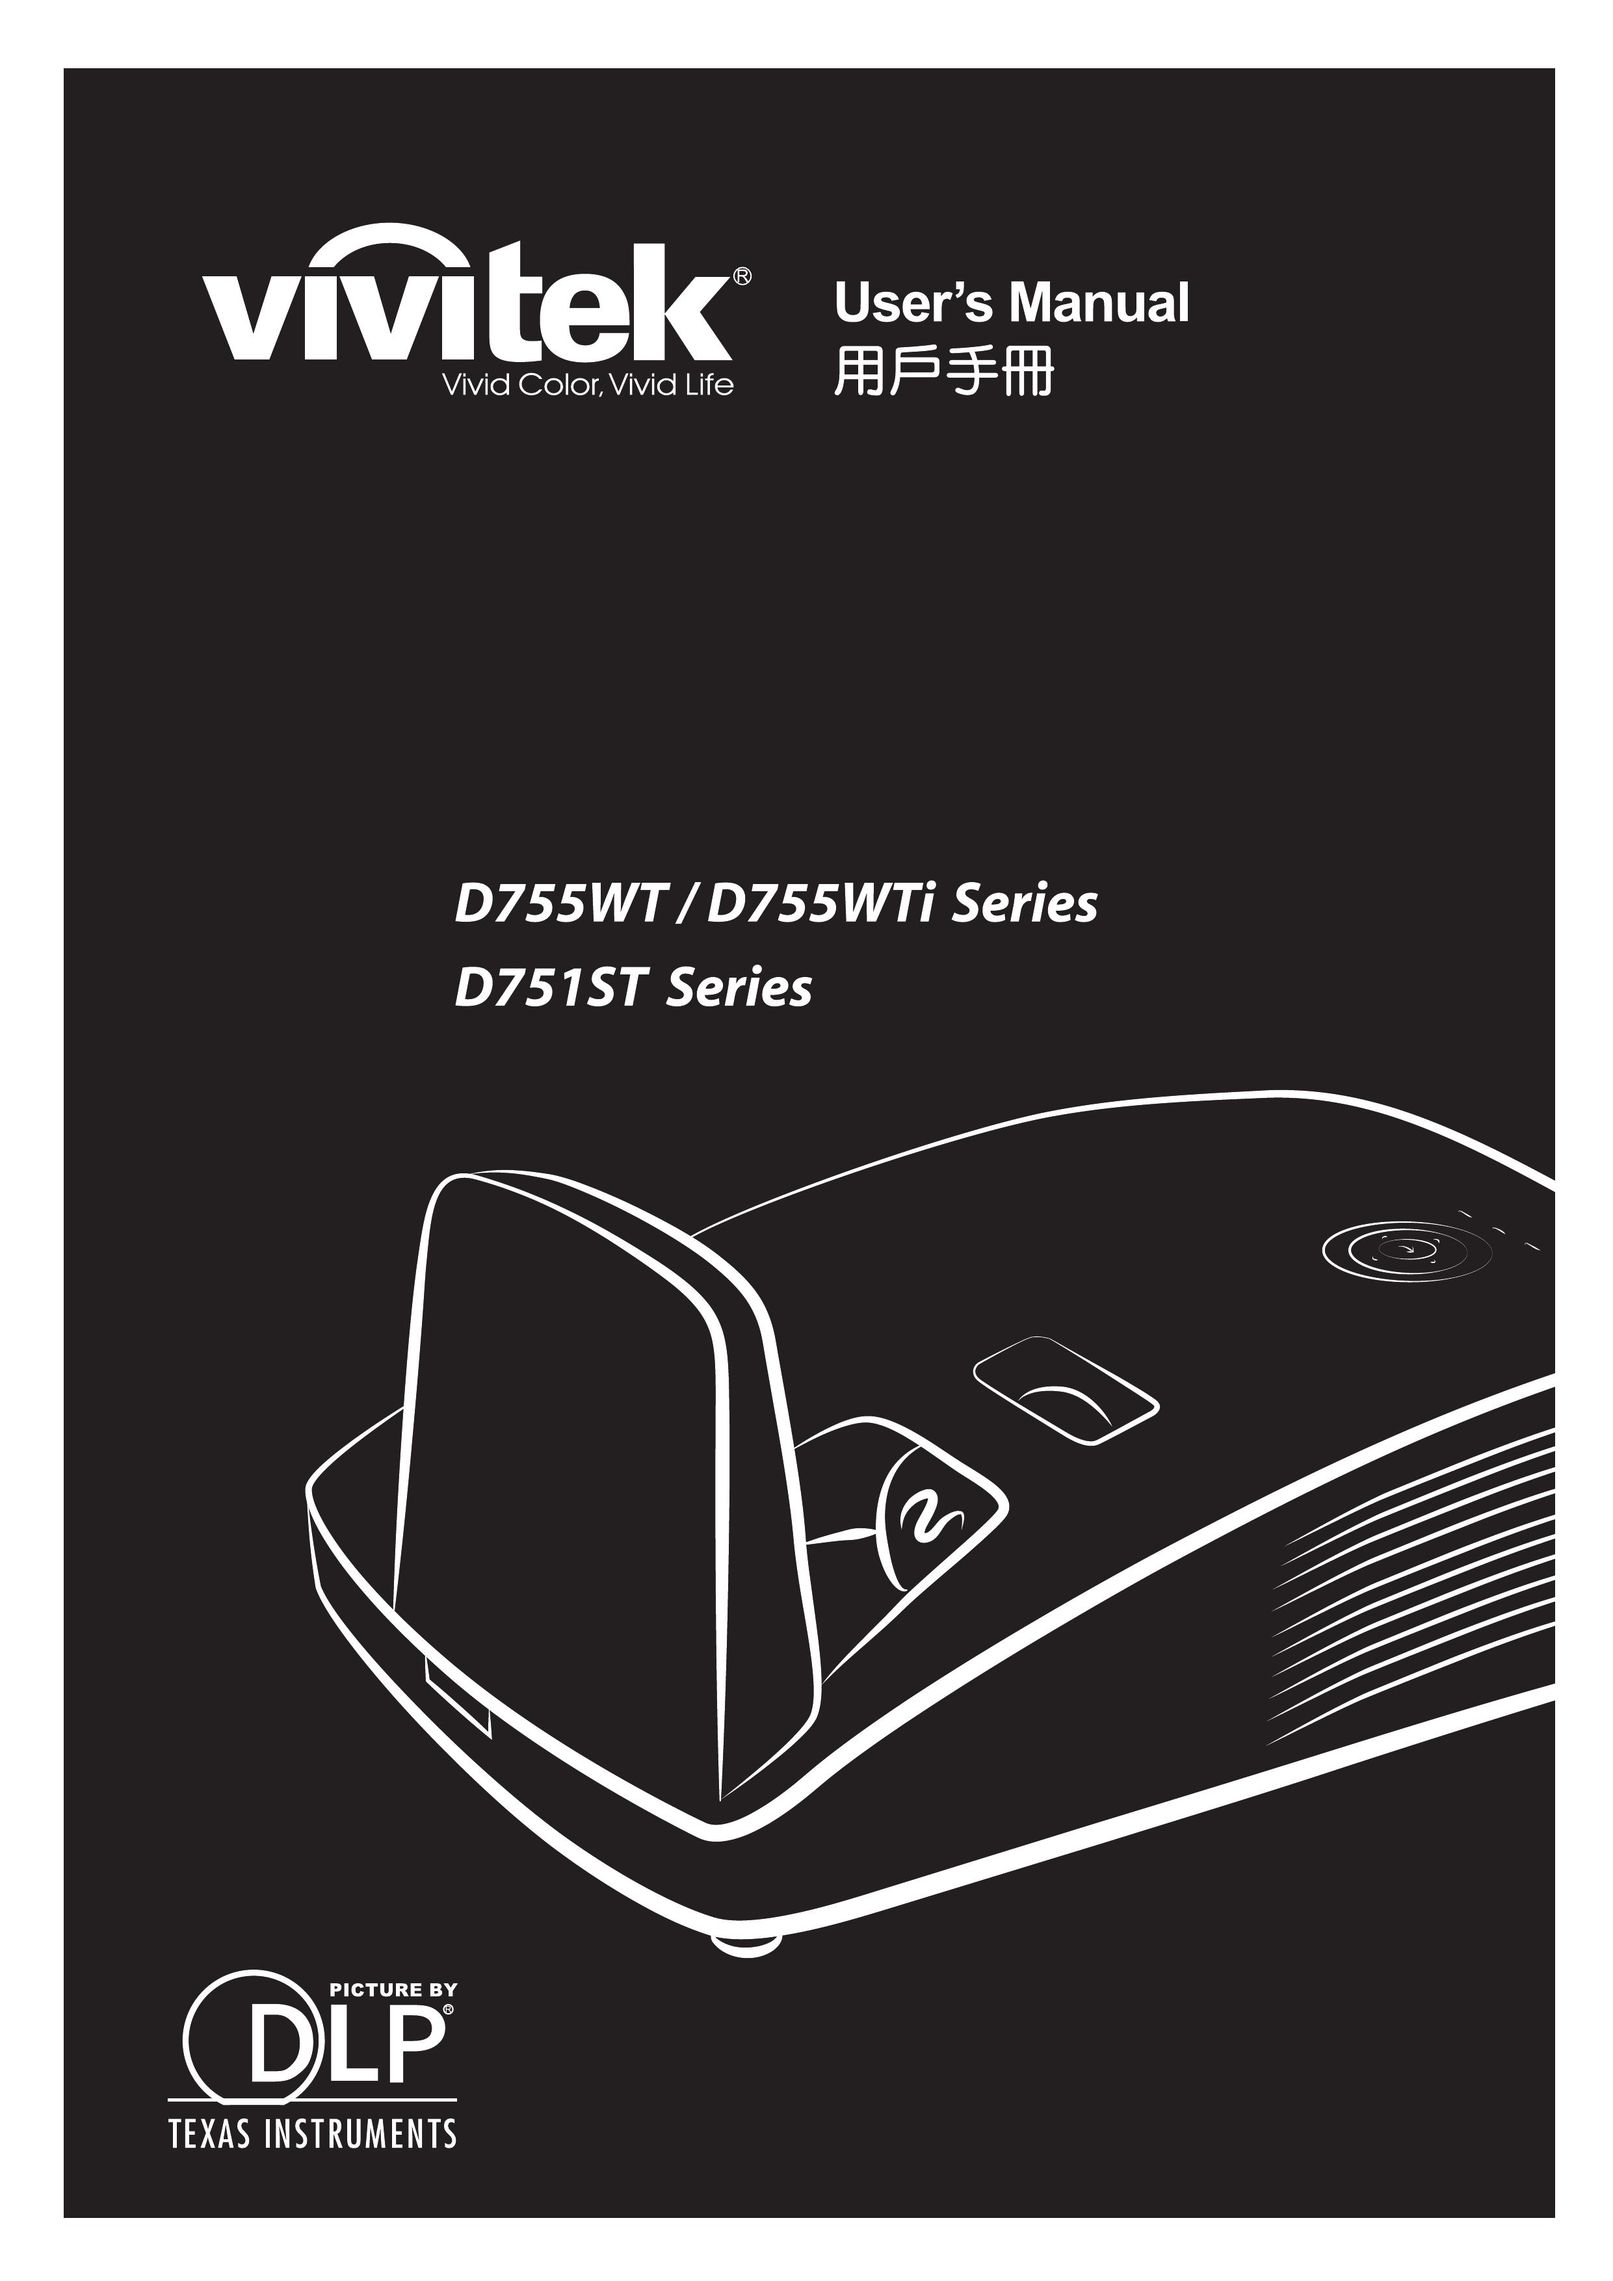 Vivitek D751ST Projector User Manual